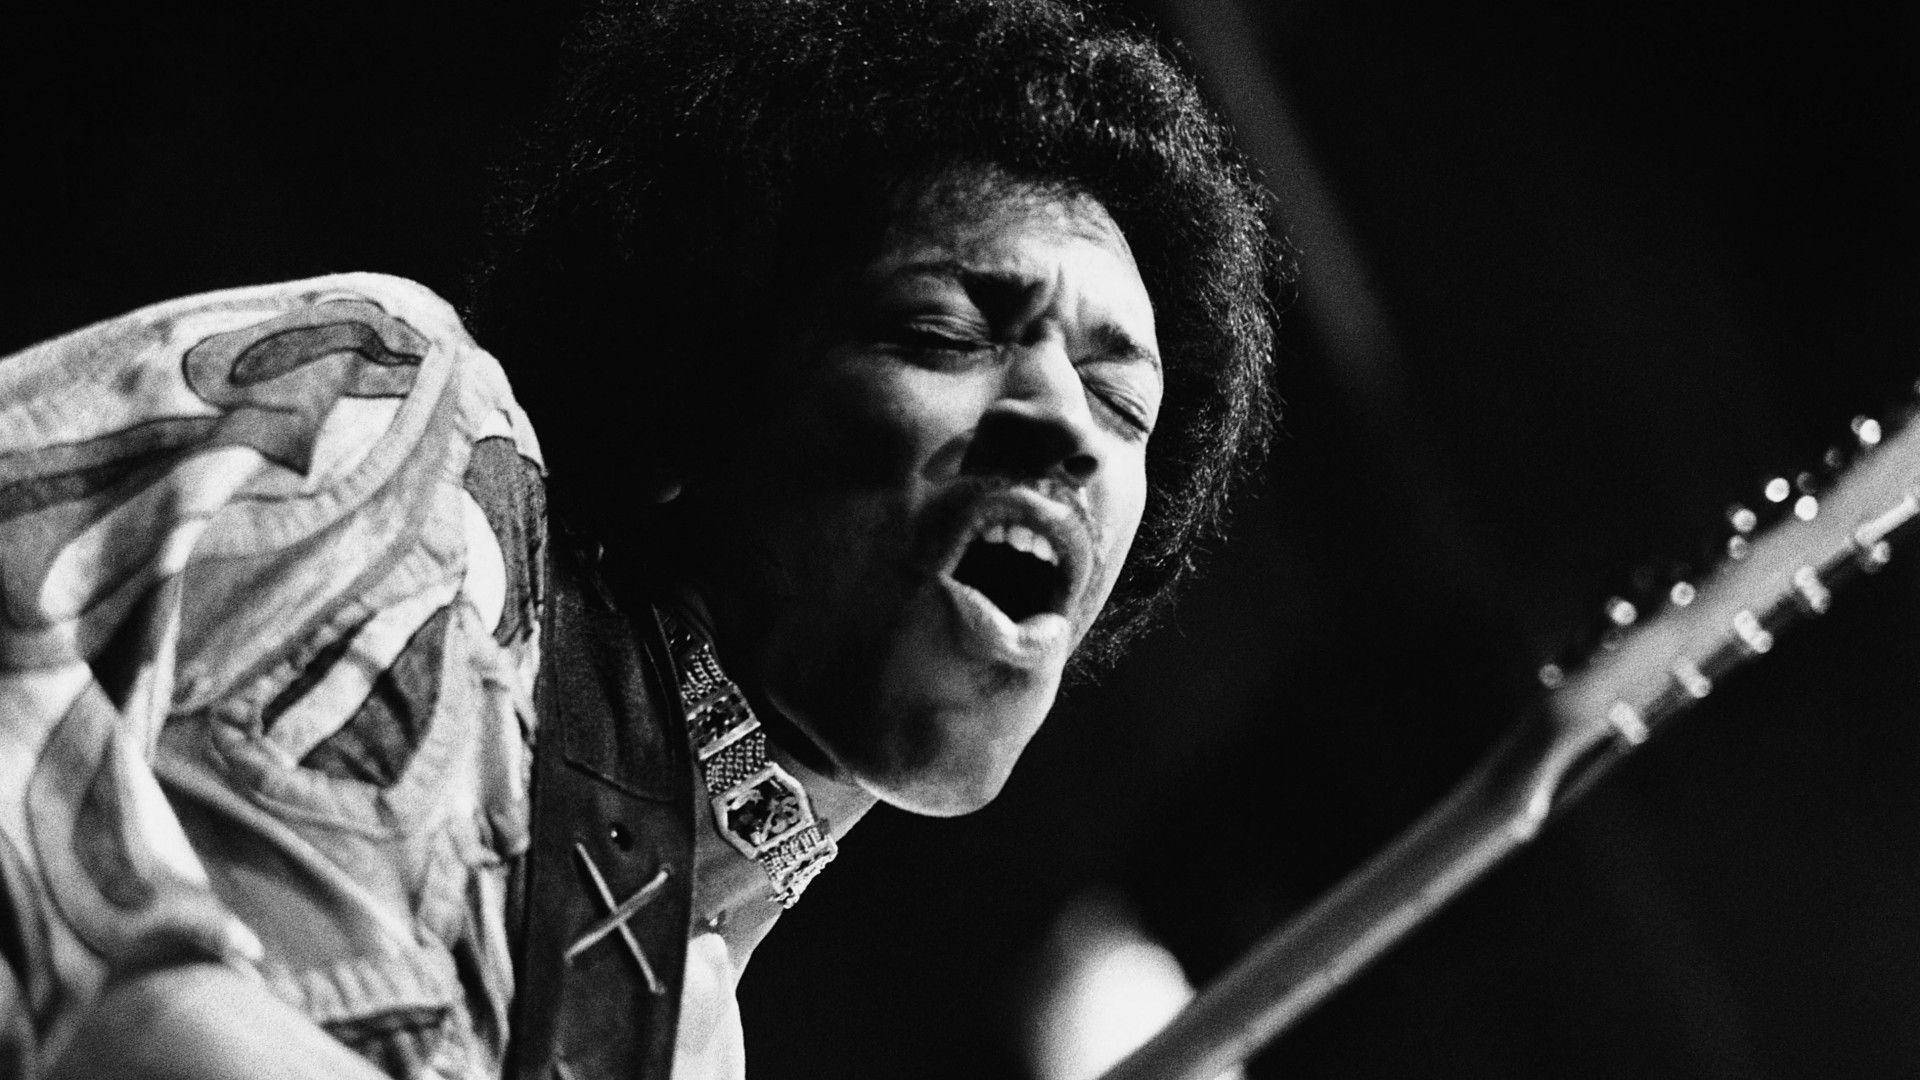 Jimi Hendrix: A Passionate Performance Background